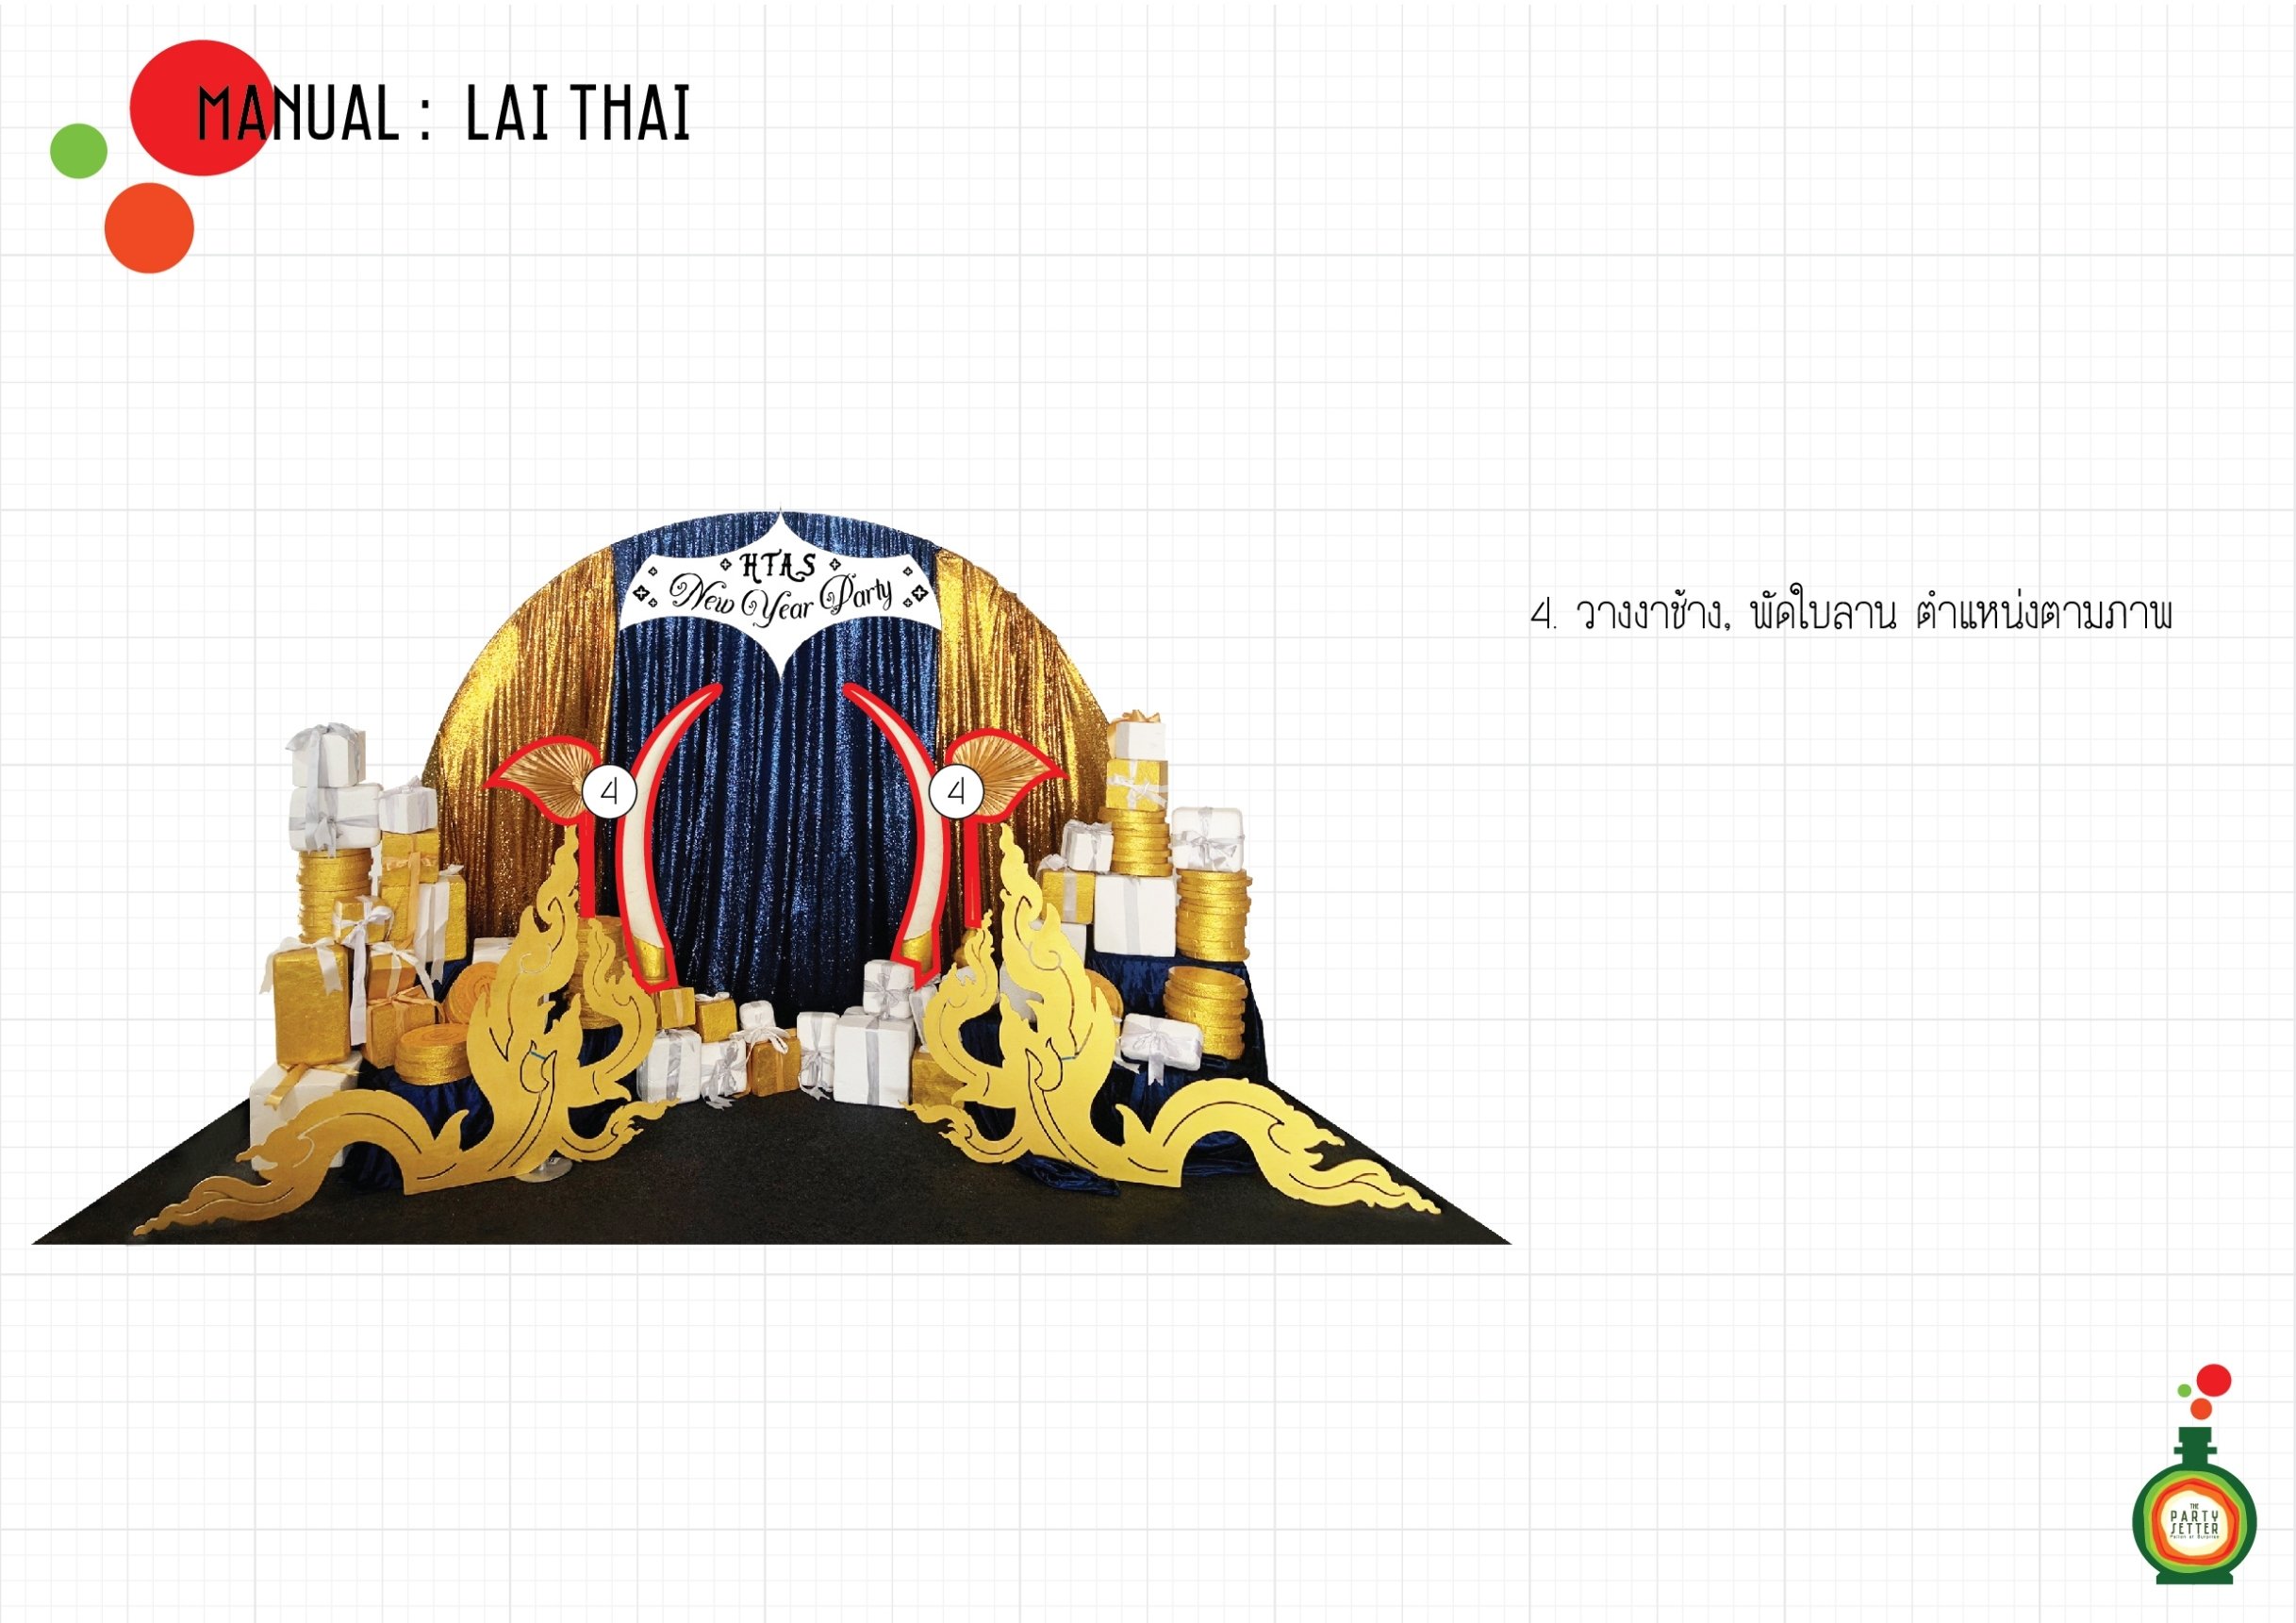 Manual_Lai Thai_04-01.jpg